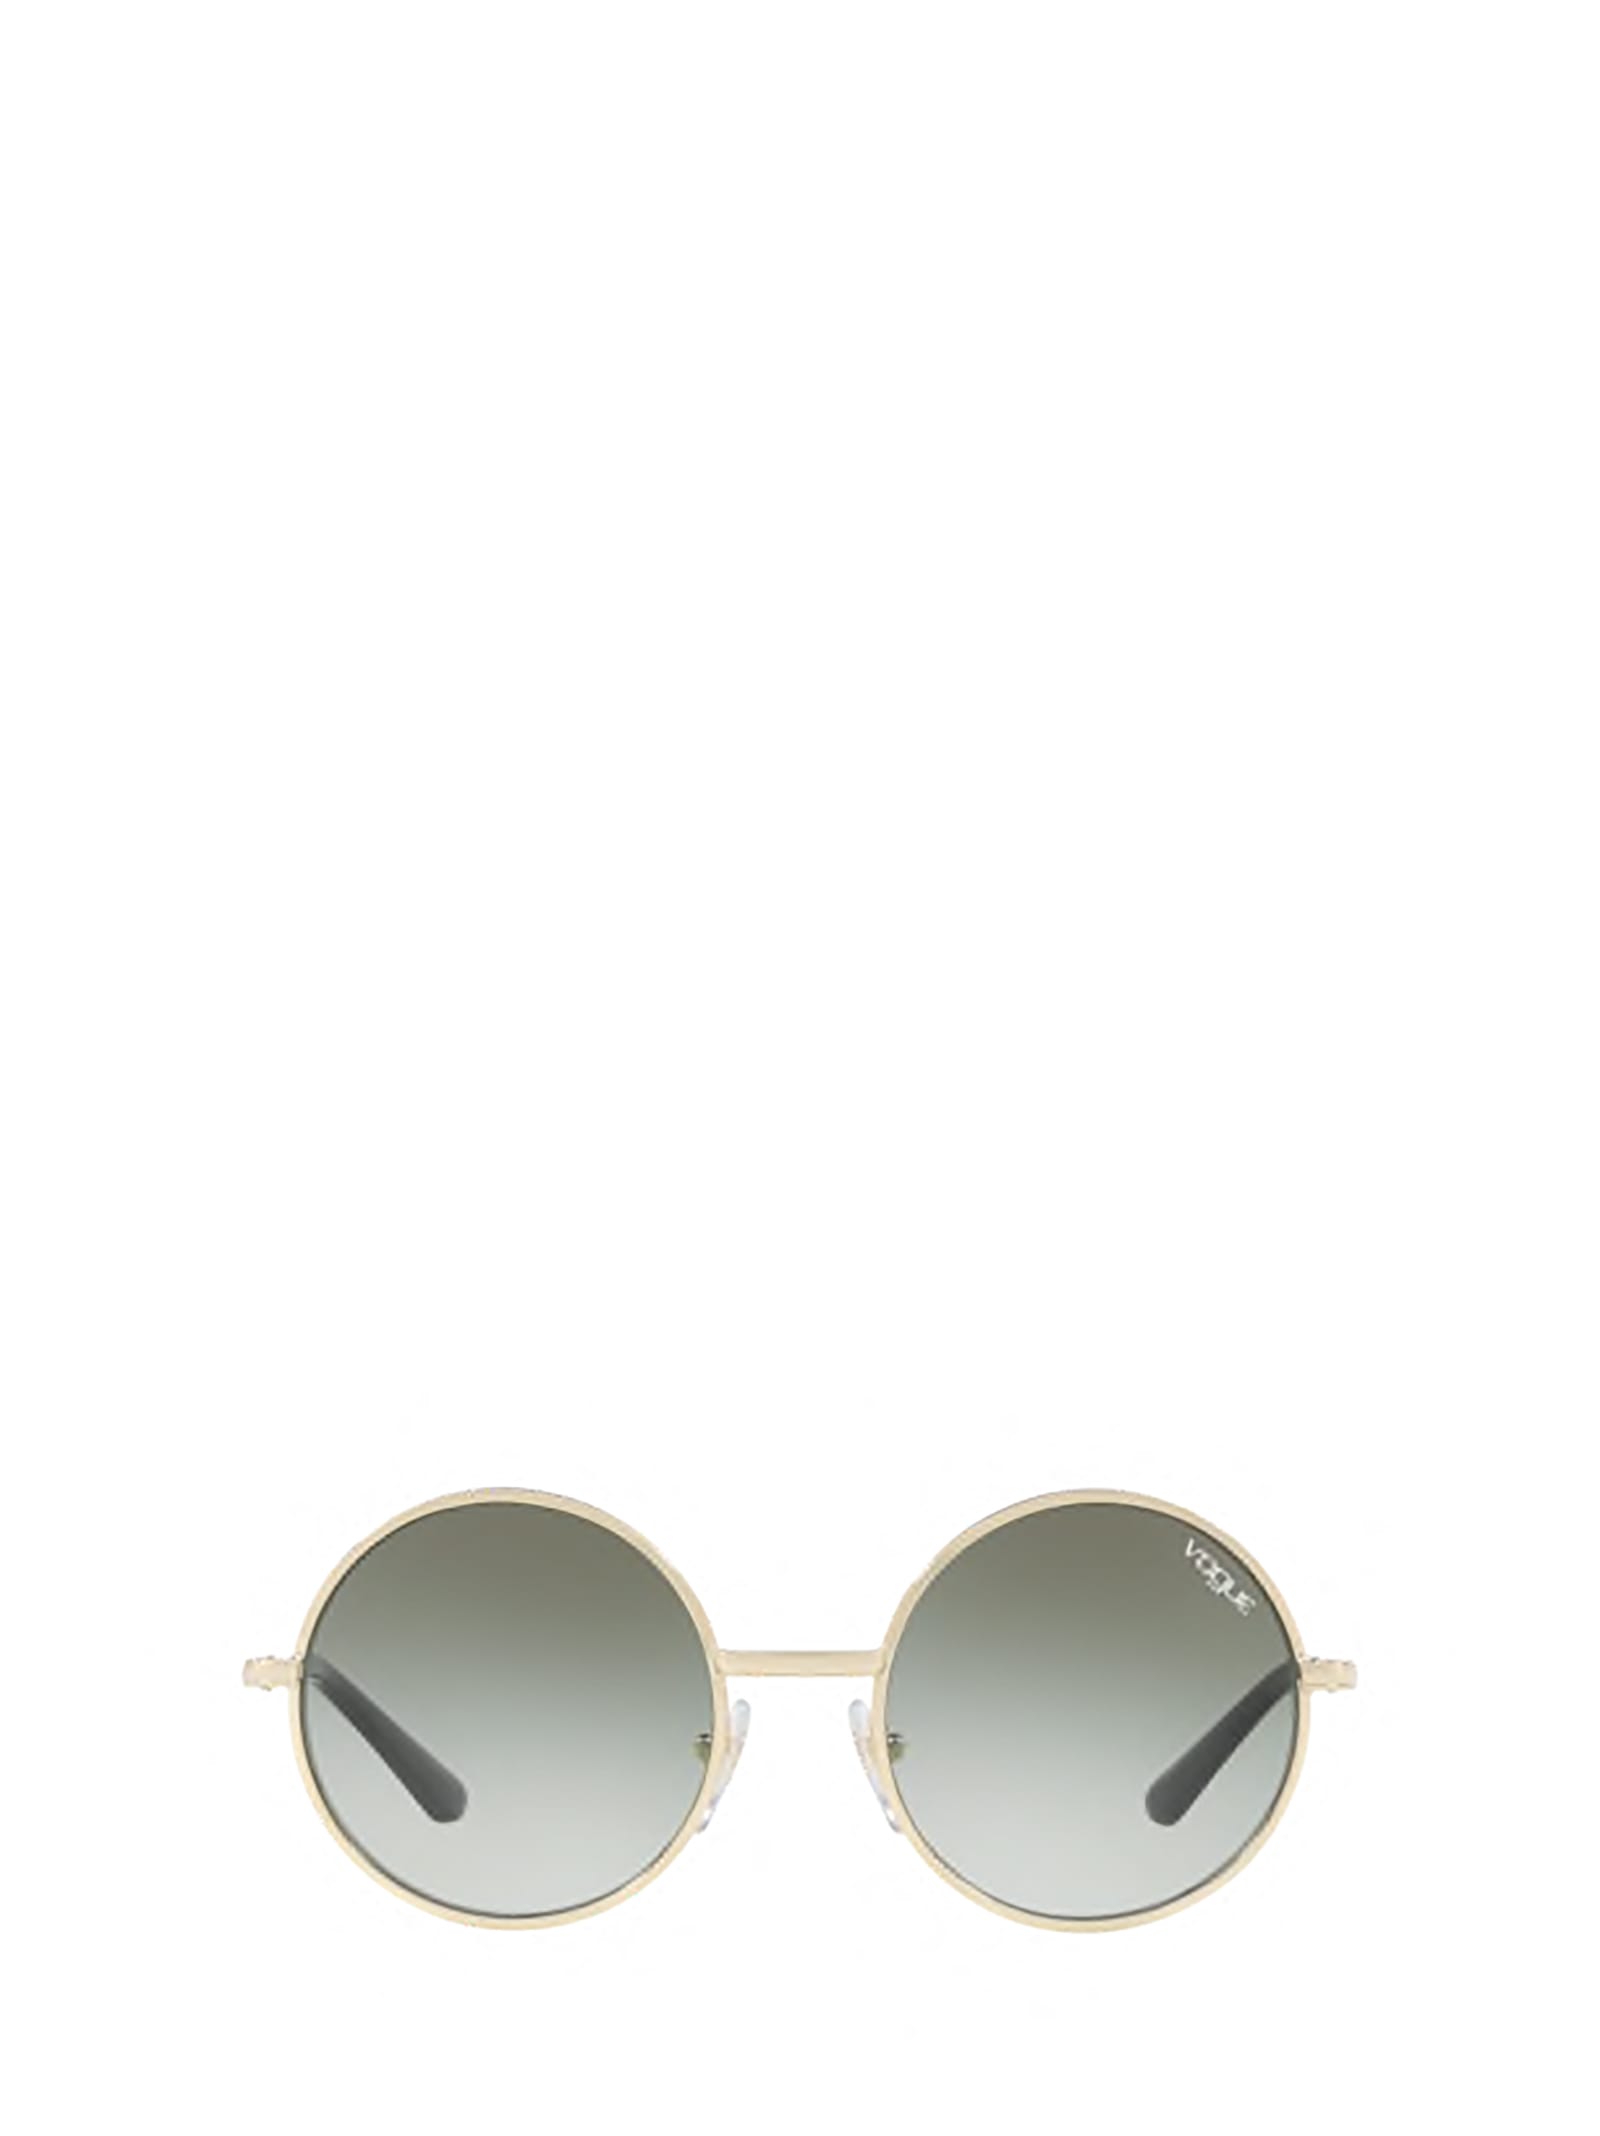 Vogue Eyewear Vogue Vo4085s Pale Gold Sunglasses